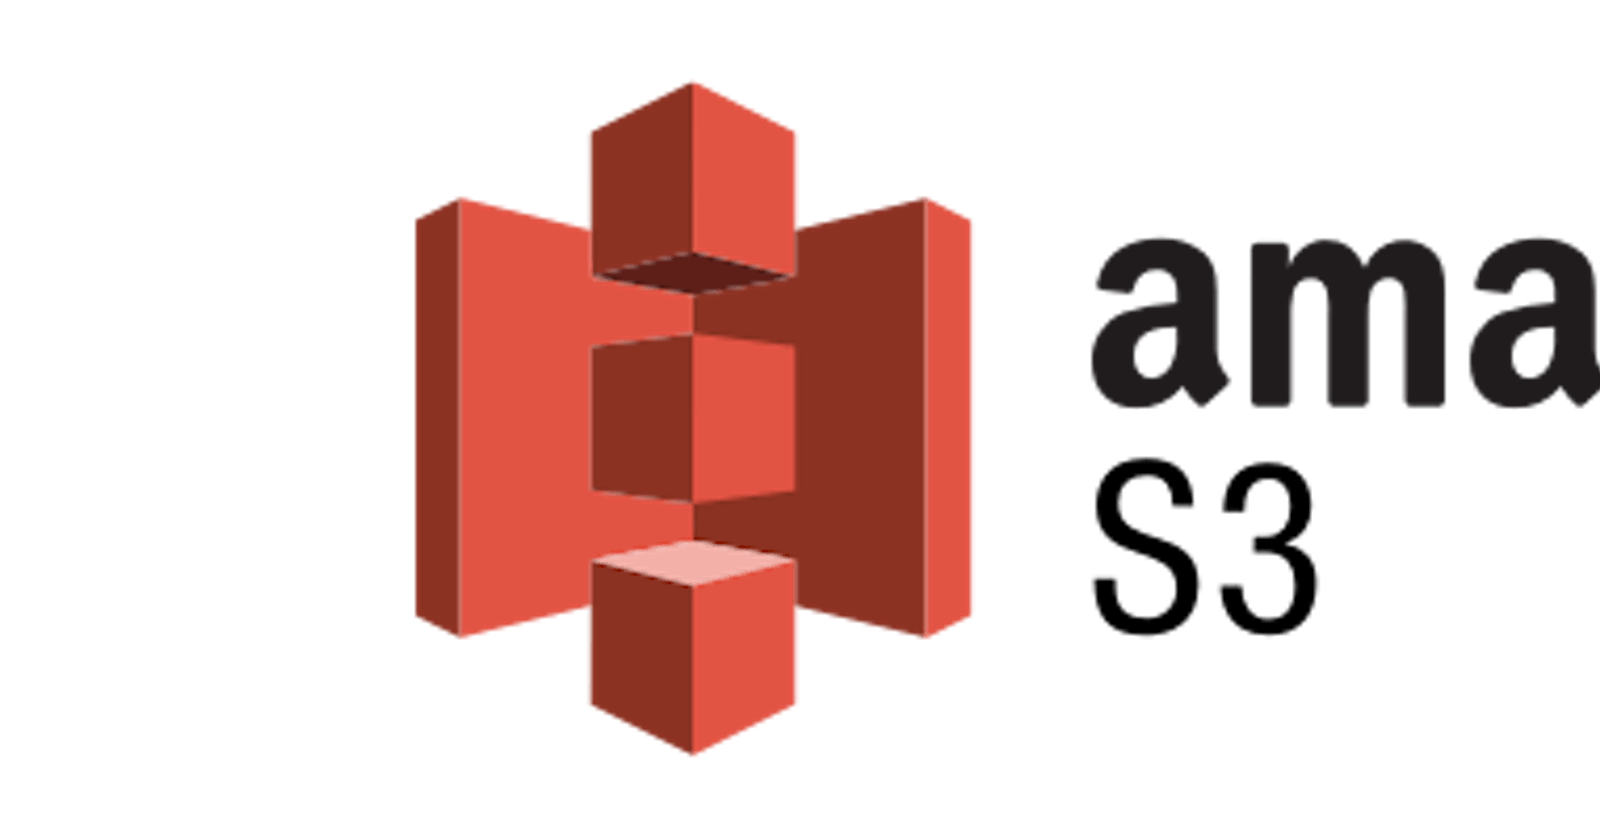 Analyzing Amazon S3 data with Apache Spark